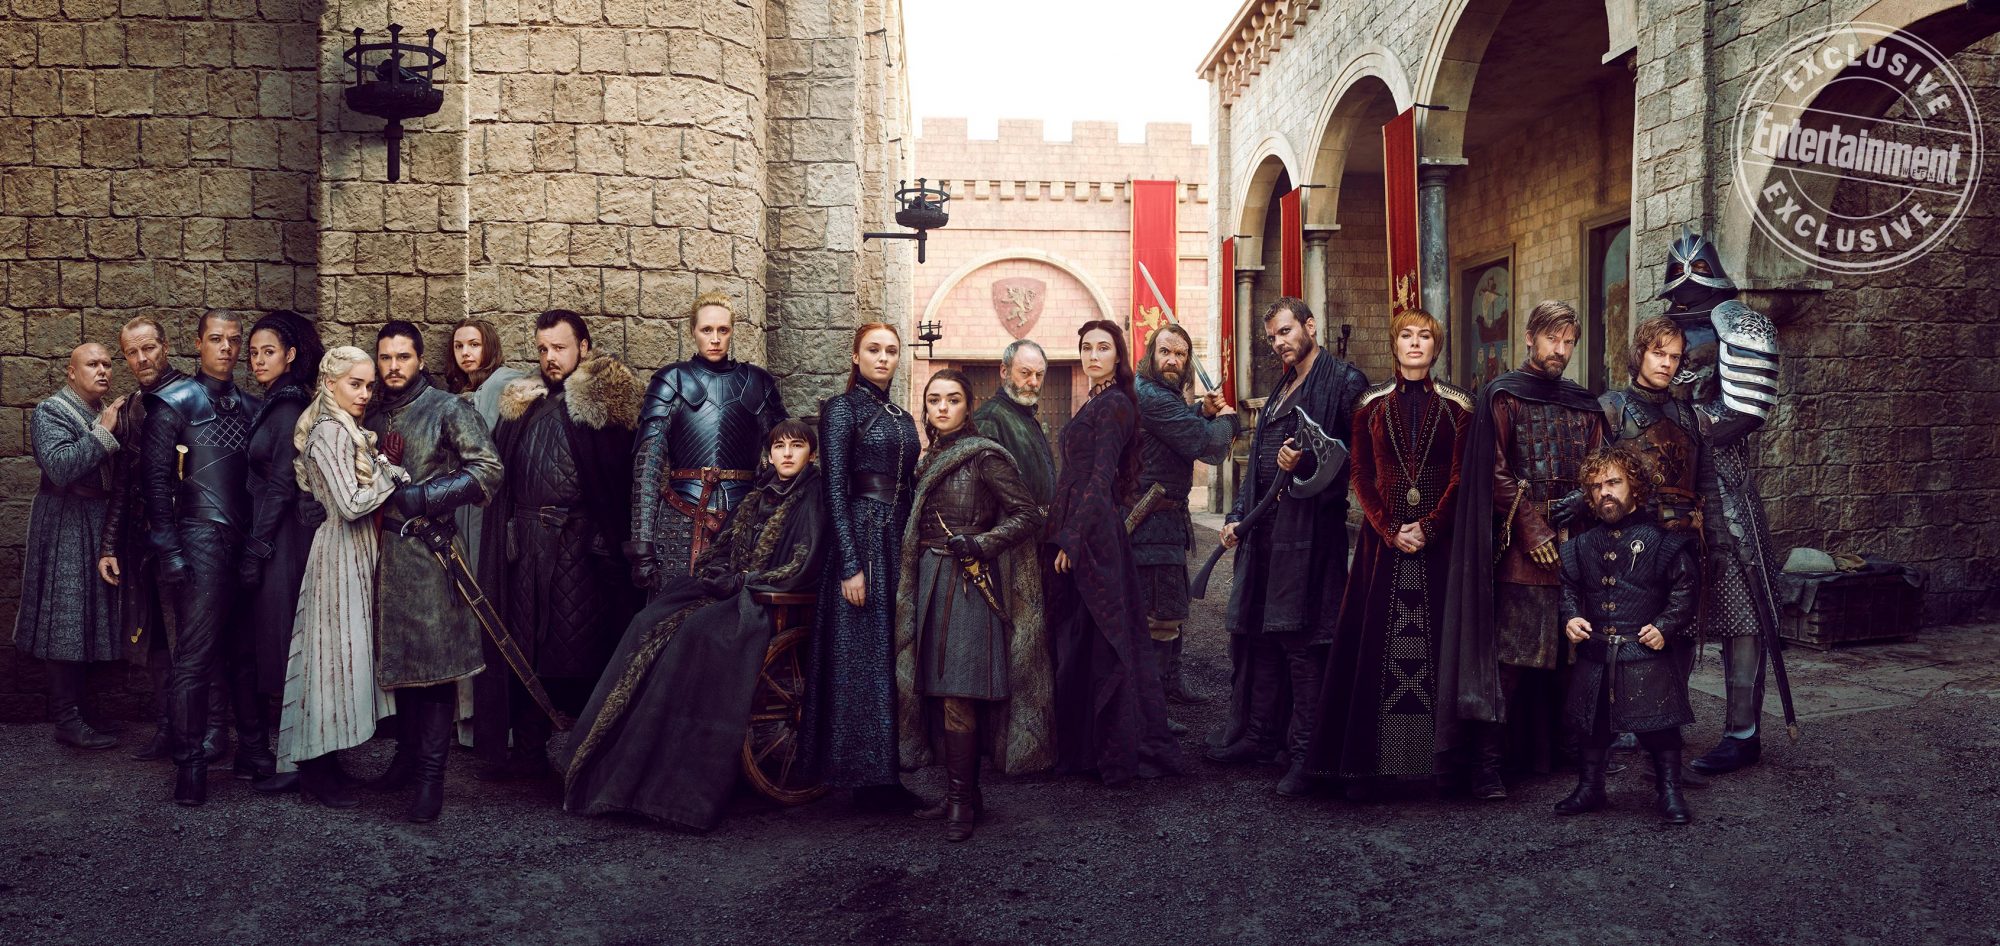 Emilia Clarke Game Of Thrones Season 8 Promotional Still Photo Wallpapers